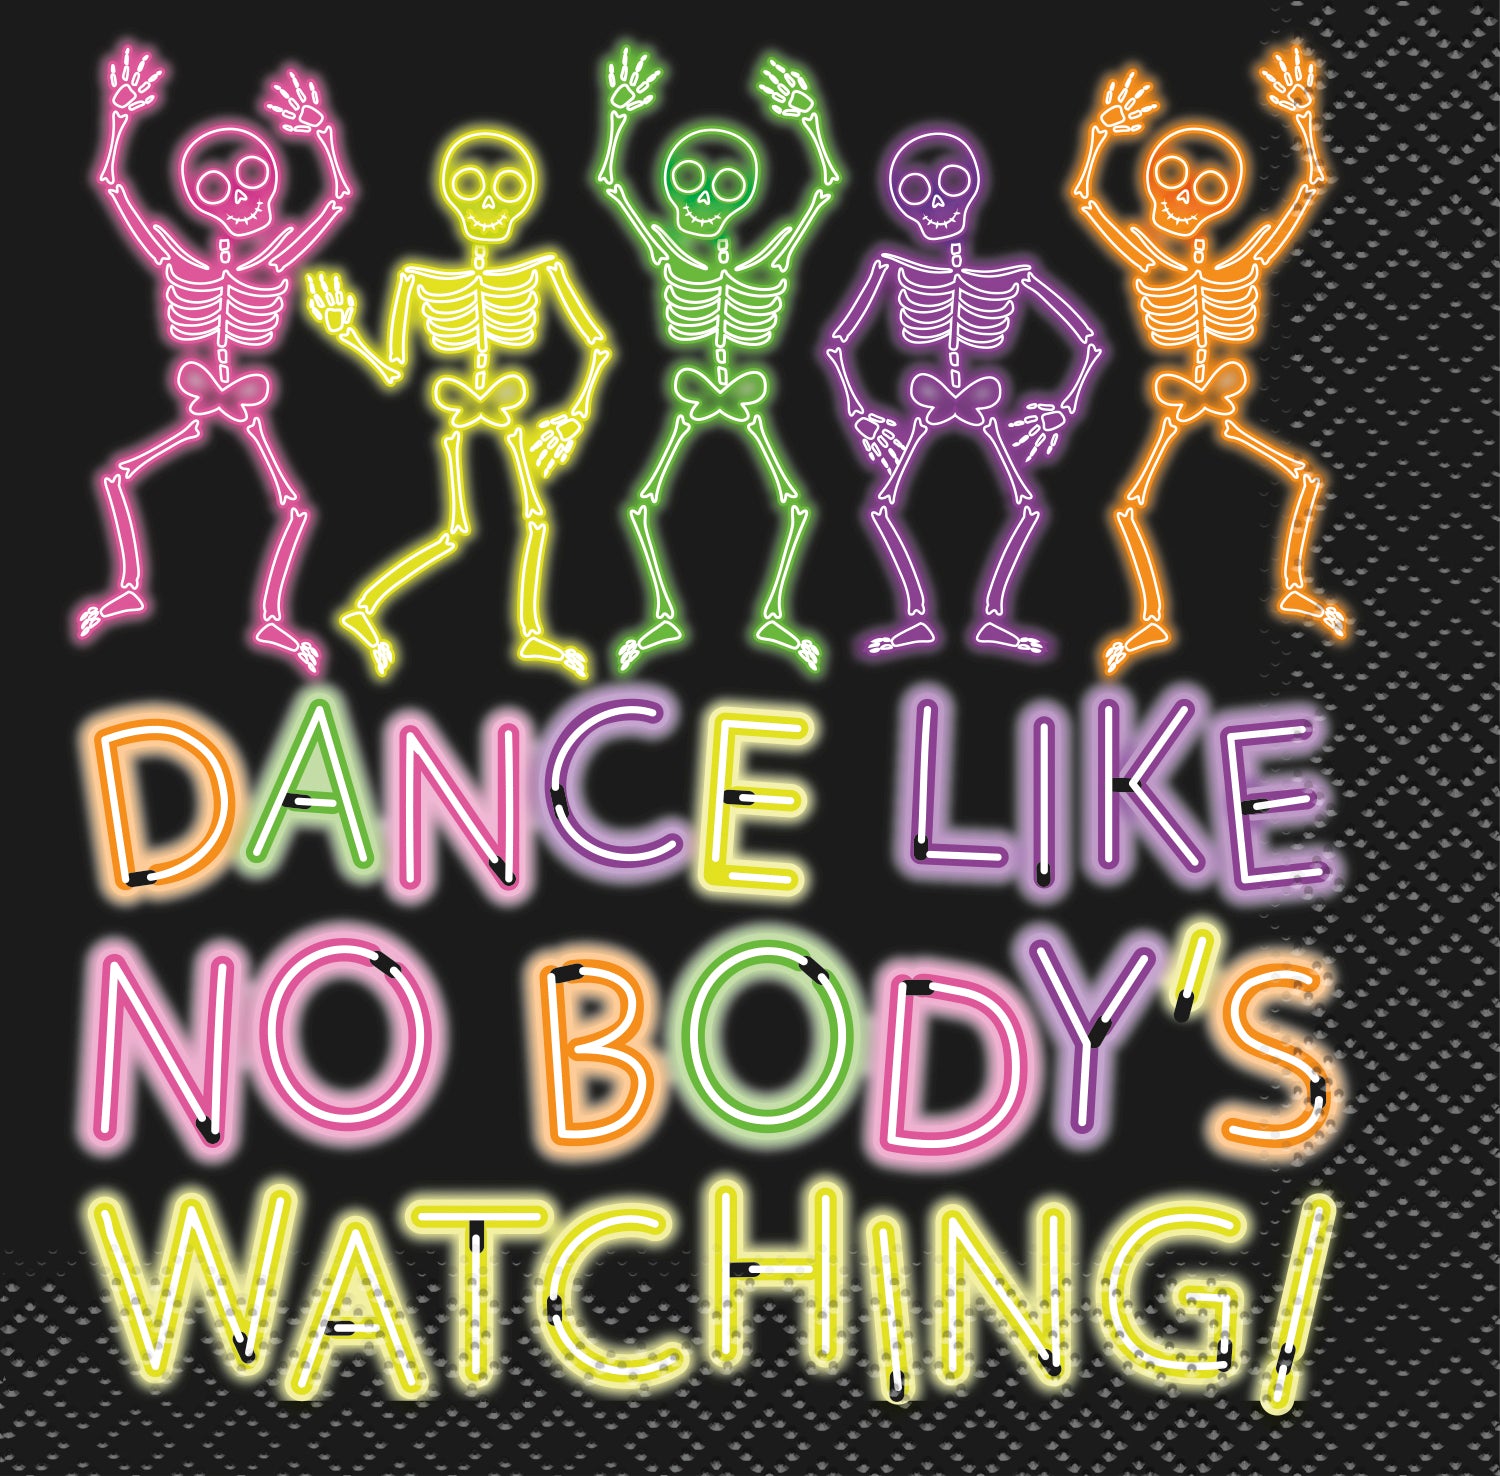 Neon Lights Halloween "Dance Like No Body's Watching!" Beverage Napkins, 16ct